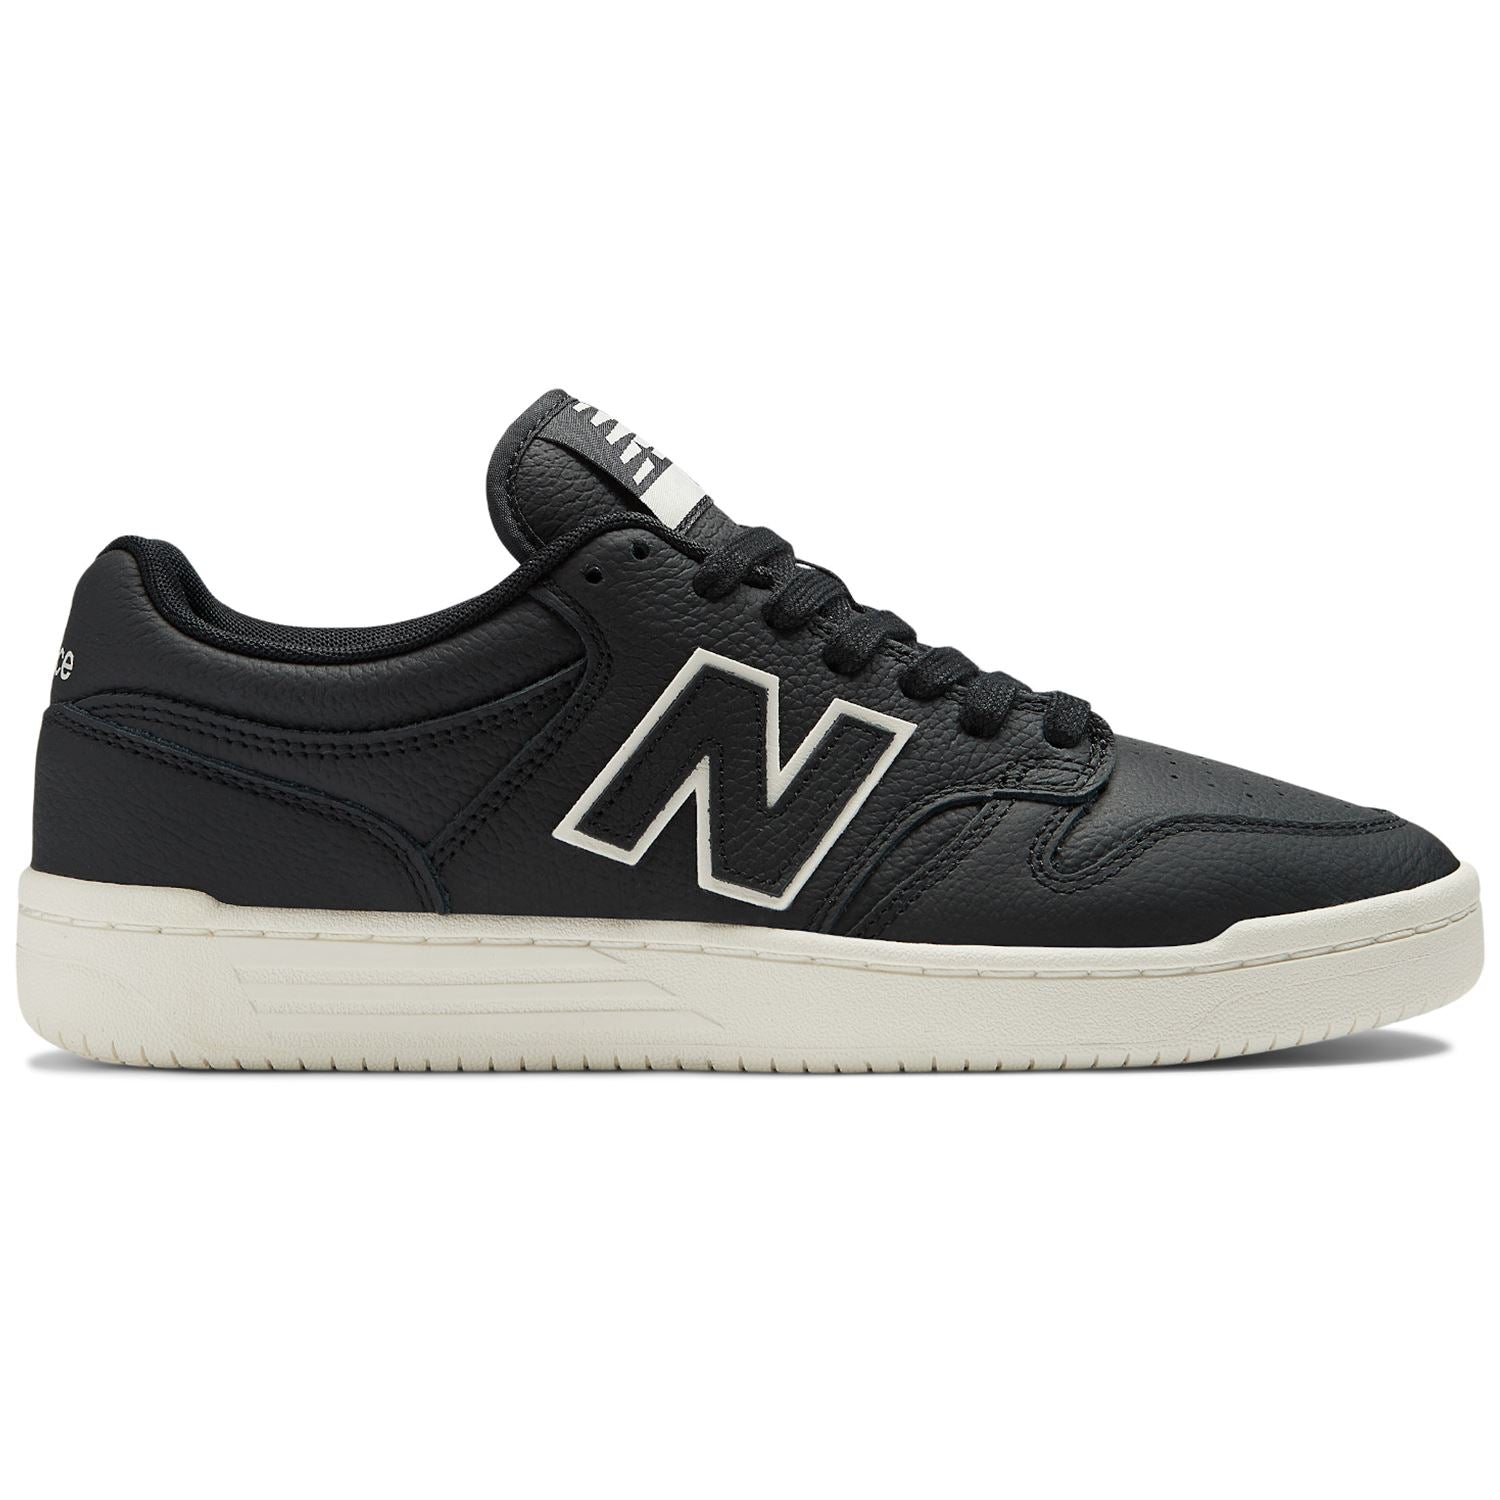 New Balance Numeric NM480 Yin Black/White footwear New Balance Numeric 